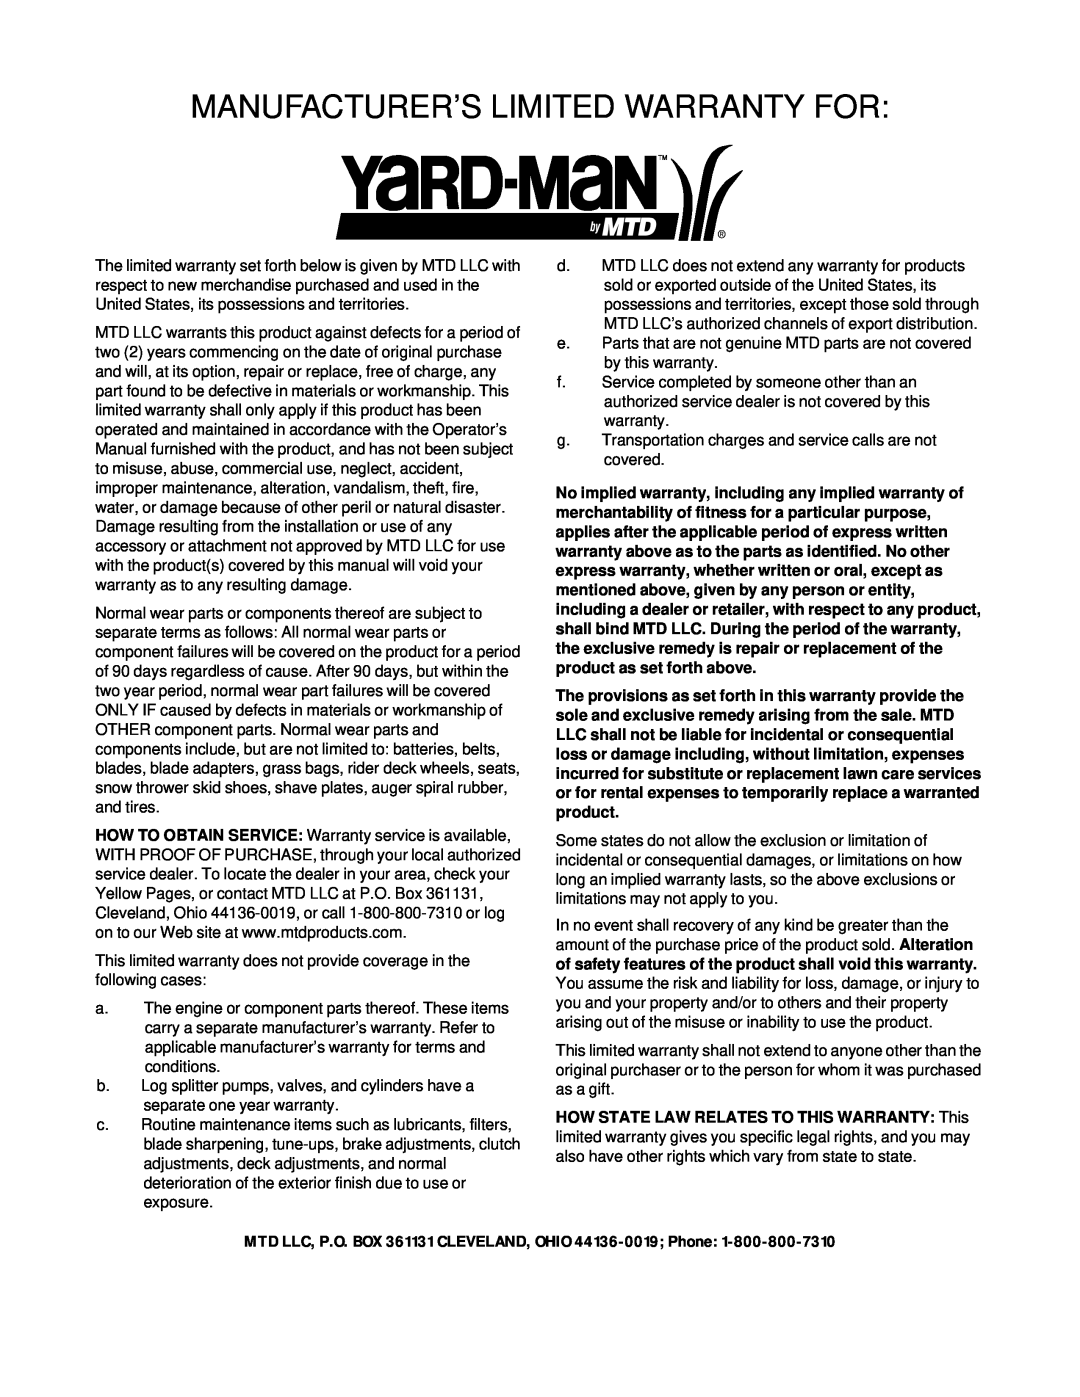 Yard-Man 435 manual MTD LLC, P.O. BOX 361131 CLEVELAND, OHIO 44136-0019 Phone, Manufacturer’S Limited Warranty For 